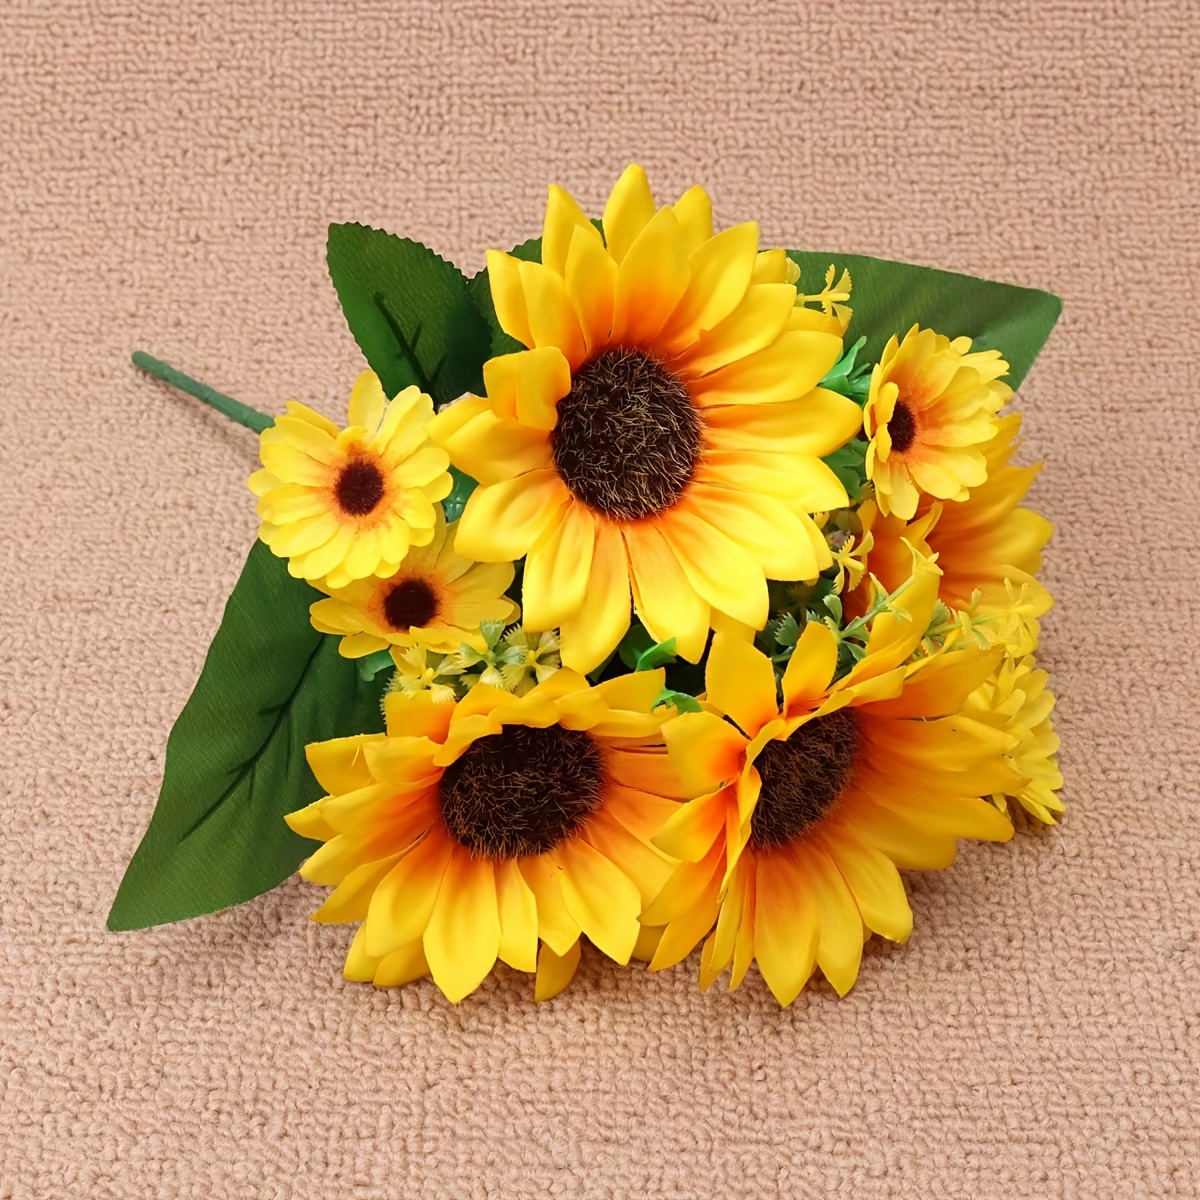 13 Heads Silk Sunflowers Artificial Sunflower Bouquet Artificial Flowers  Floral Arrangement for Wedding Party Office Home